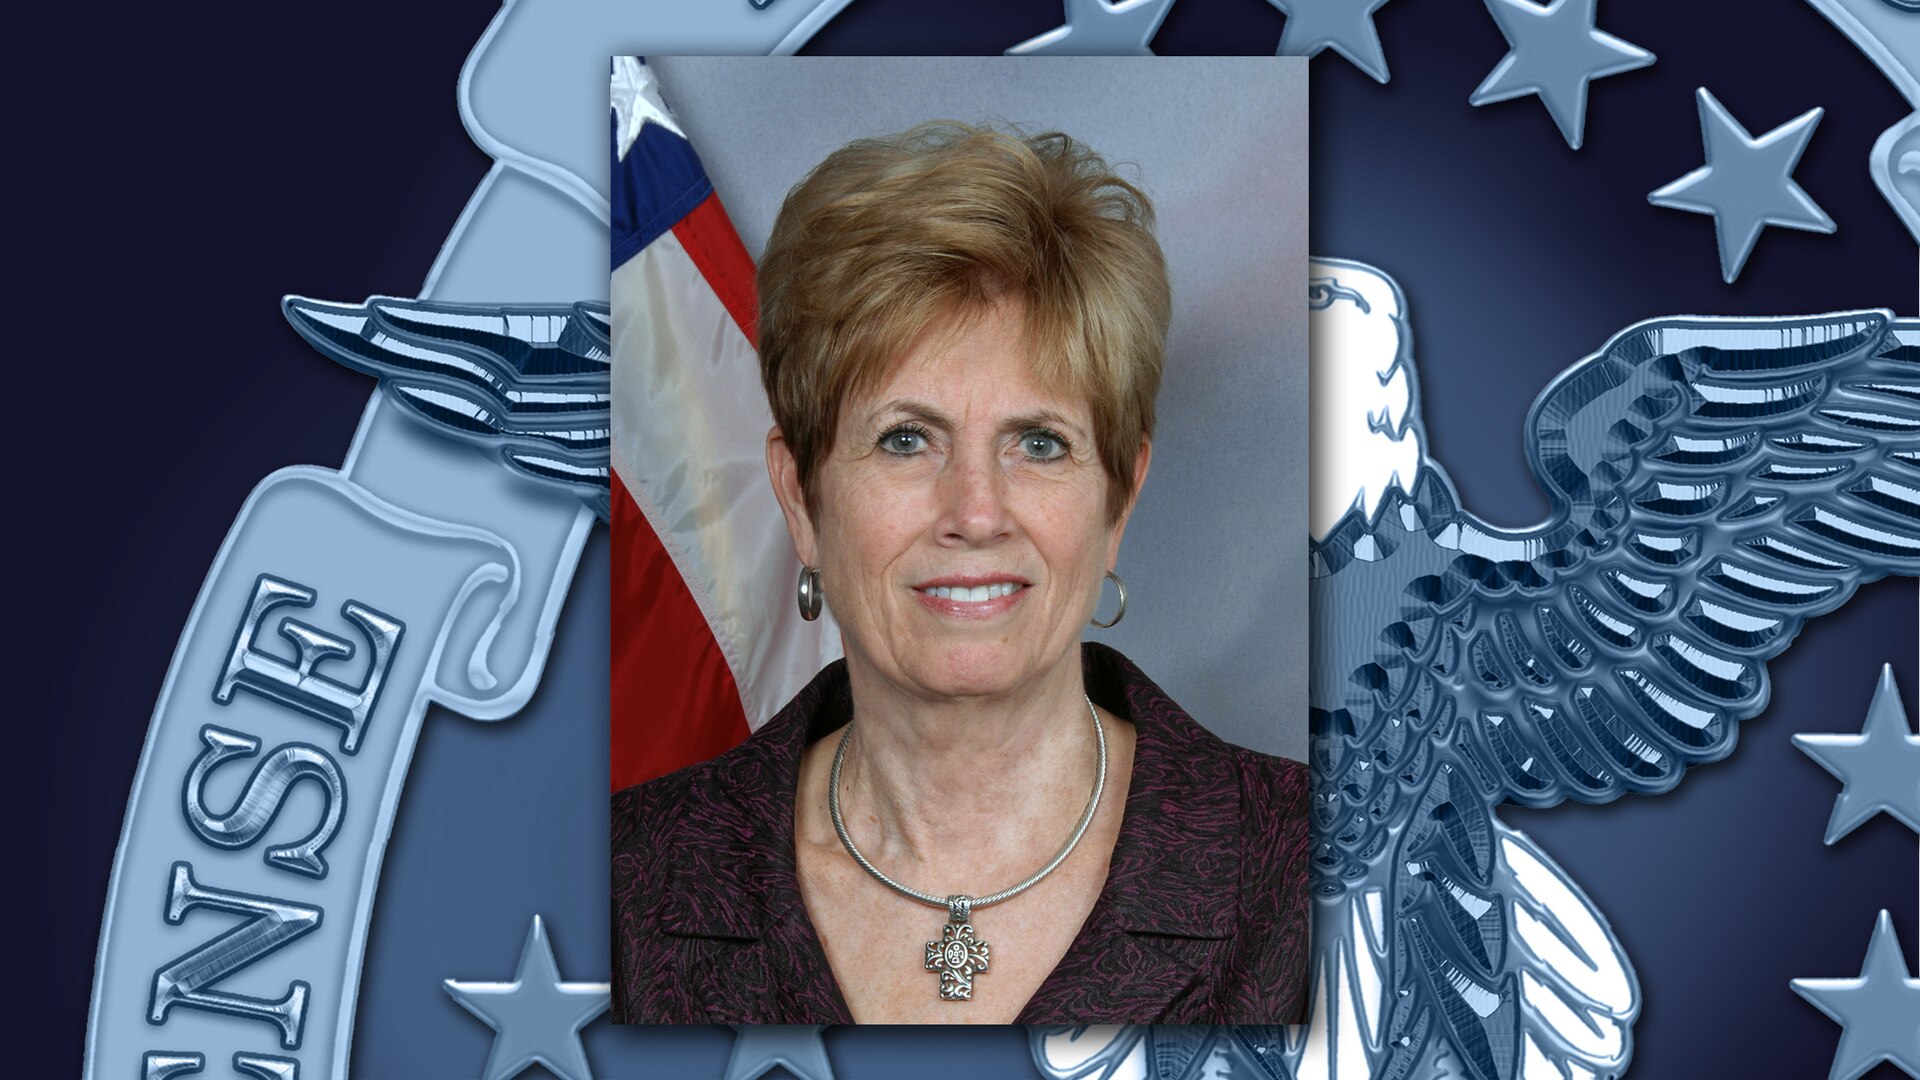 A portrait of Janet Hoffheins over a DLA emblem background